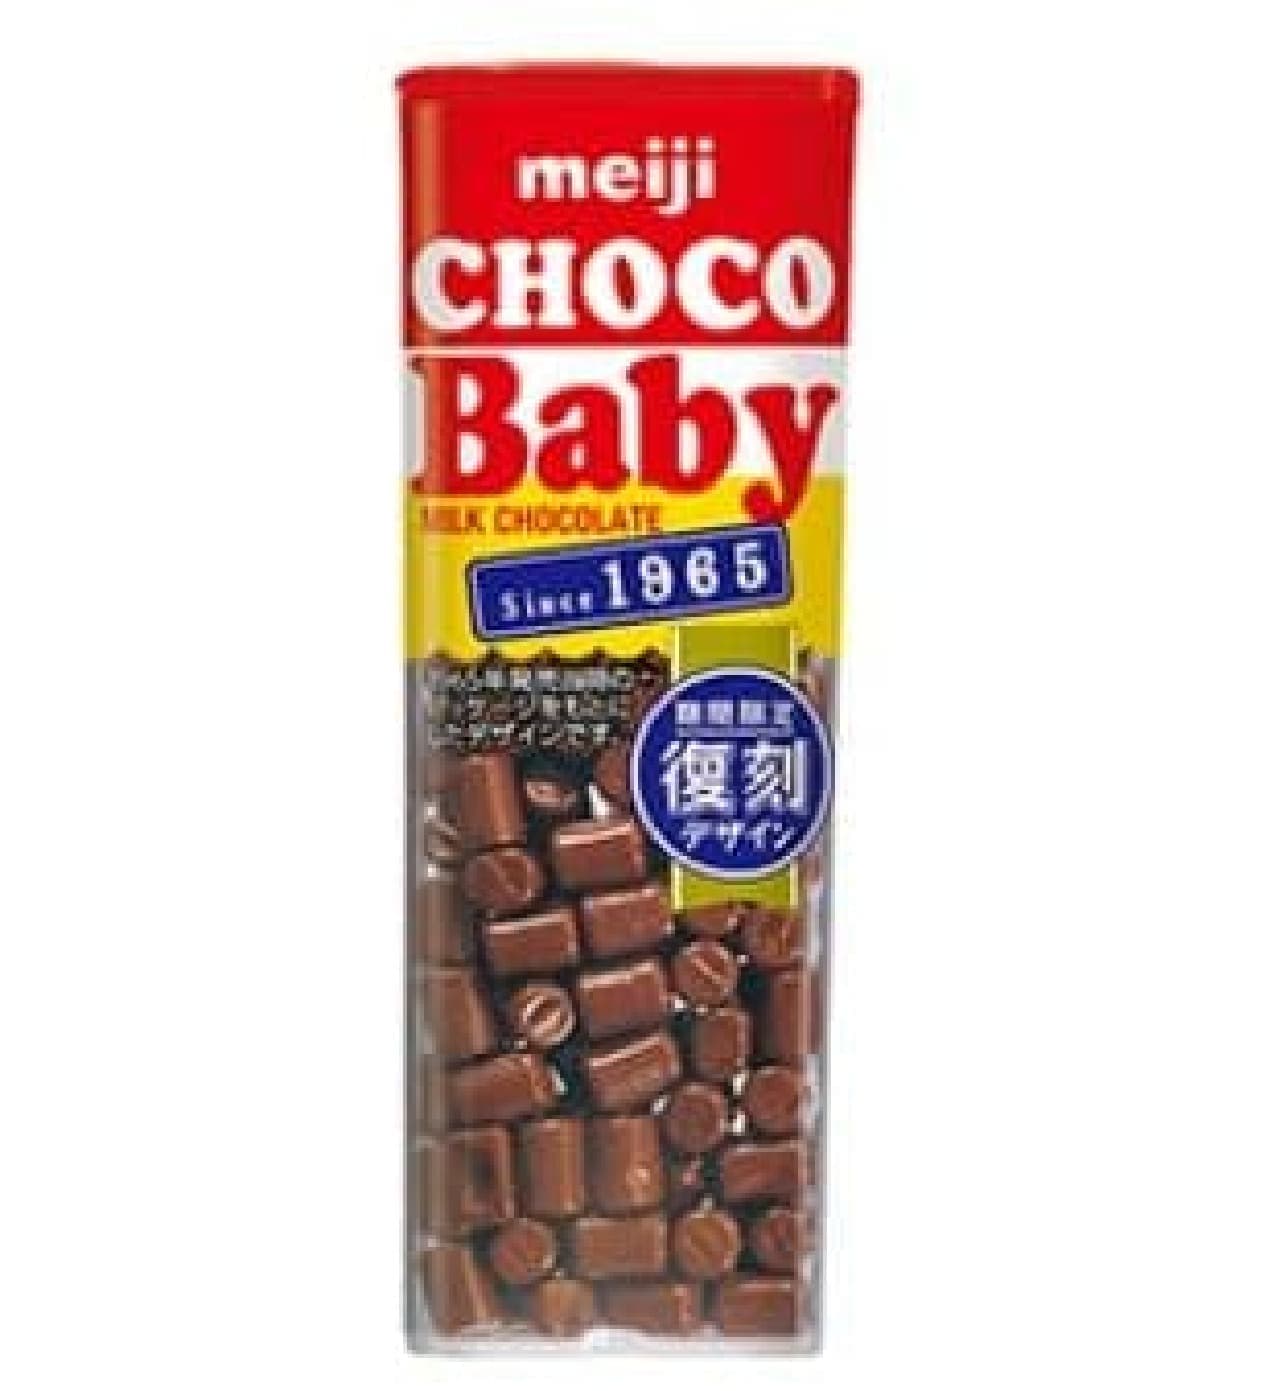 Meiji "Choco Baby Reprint"